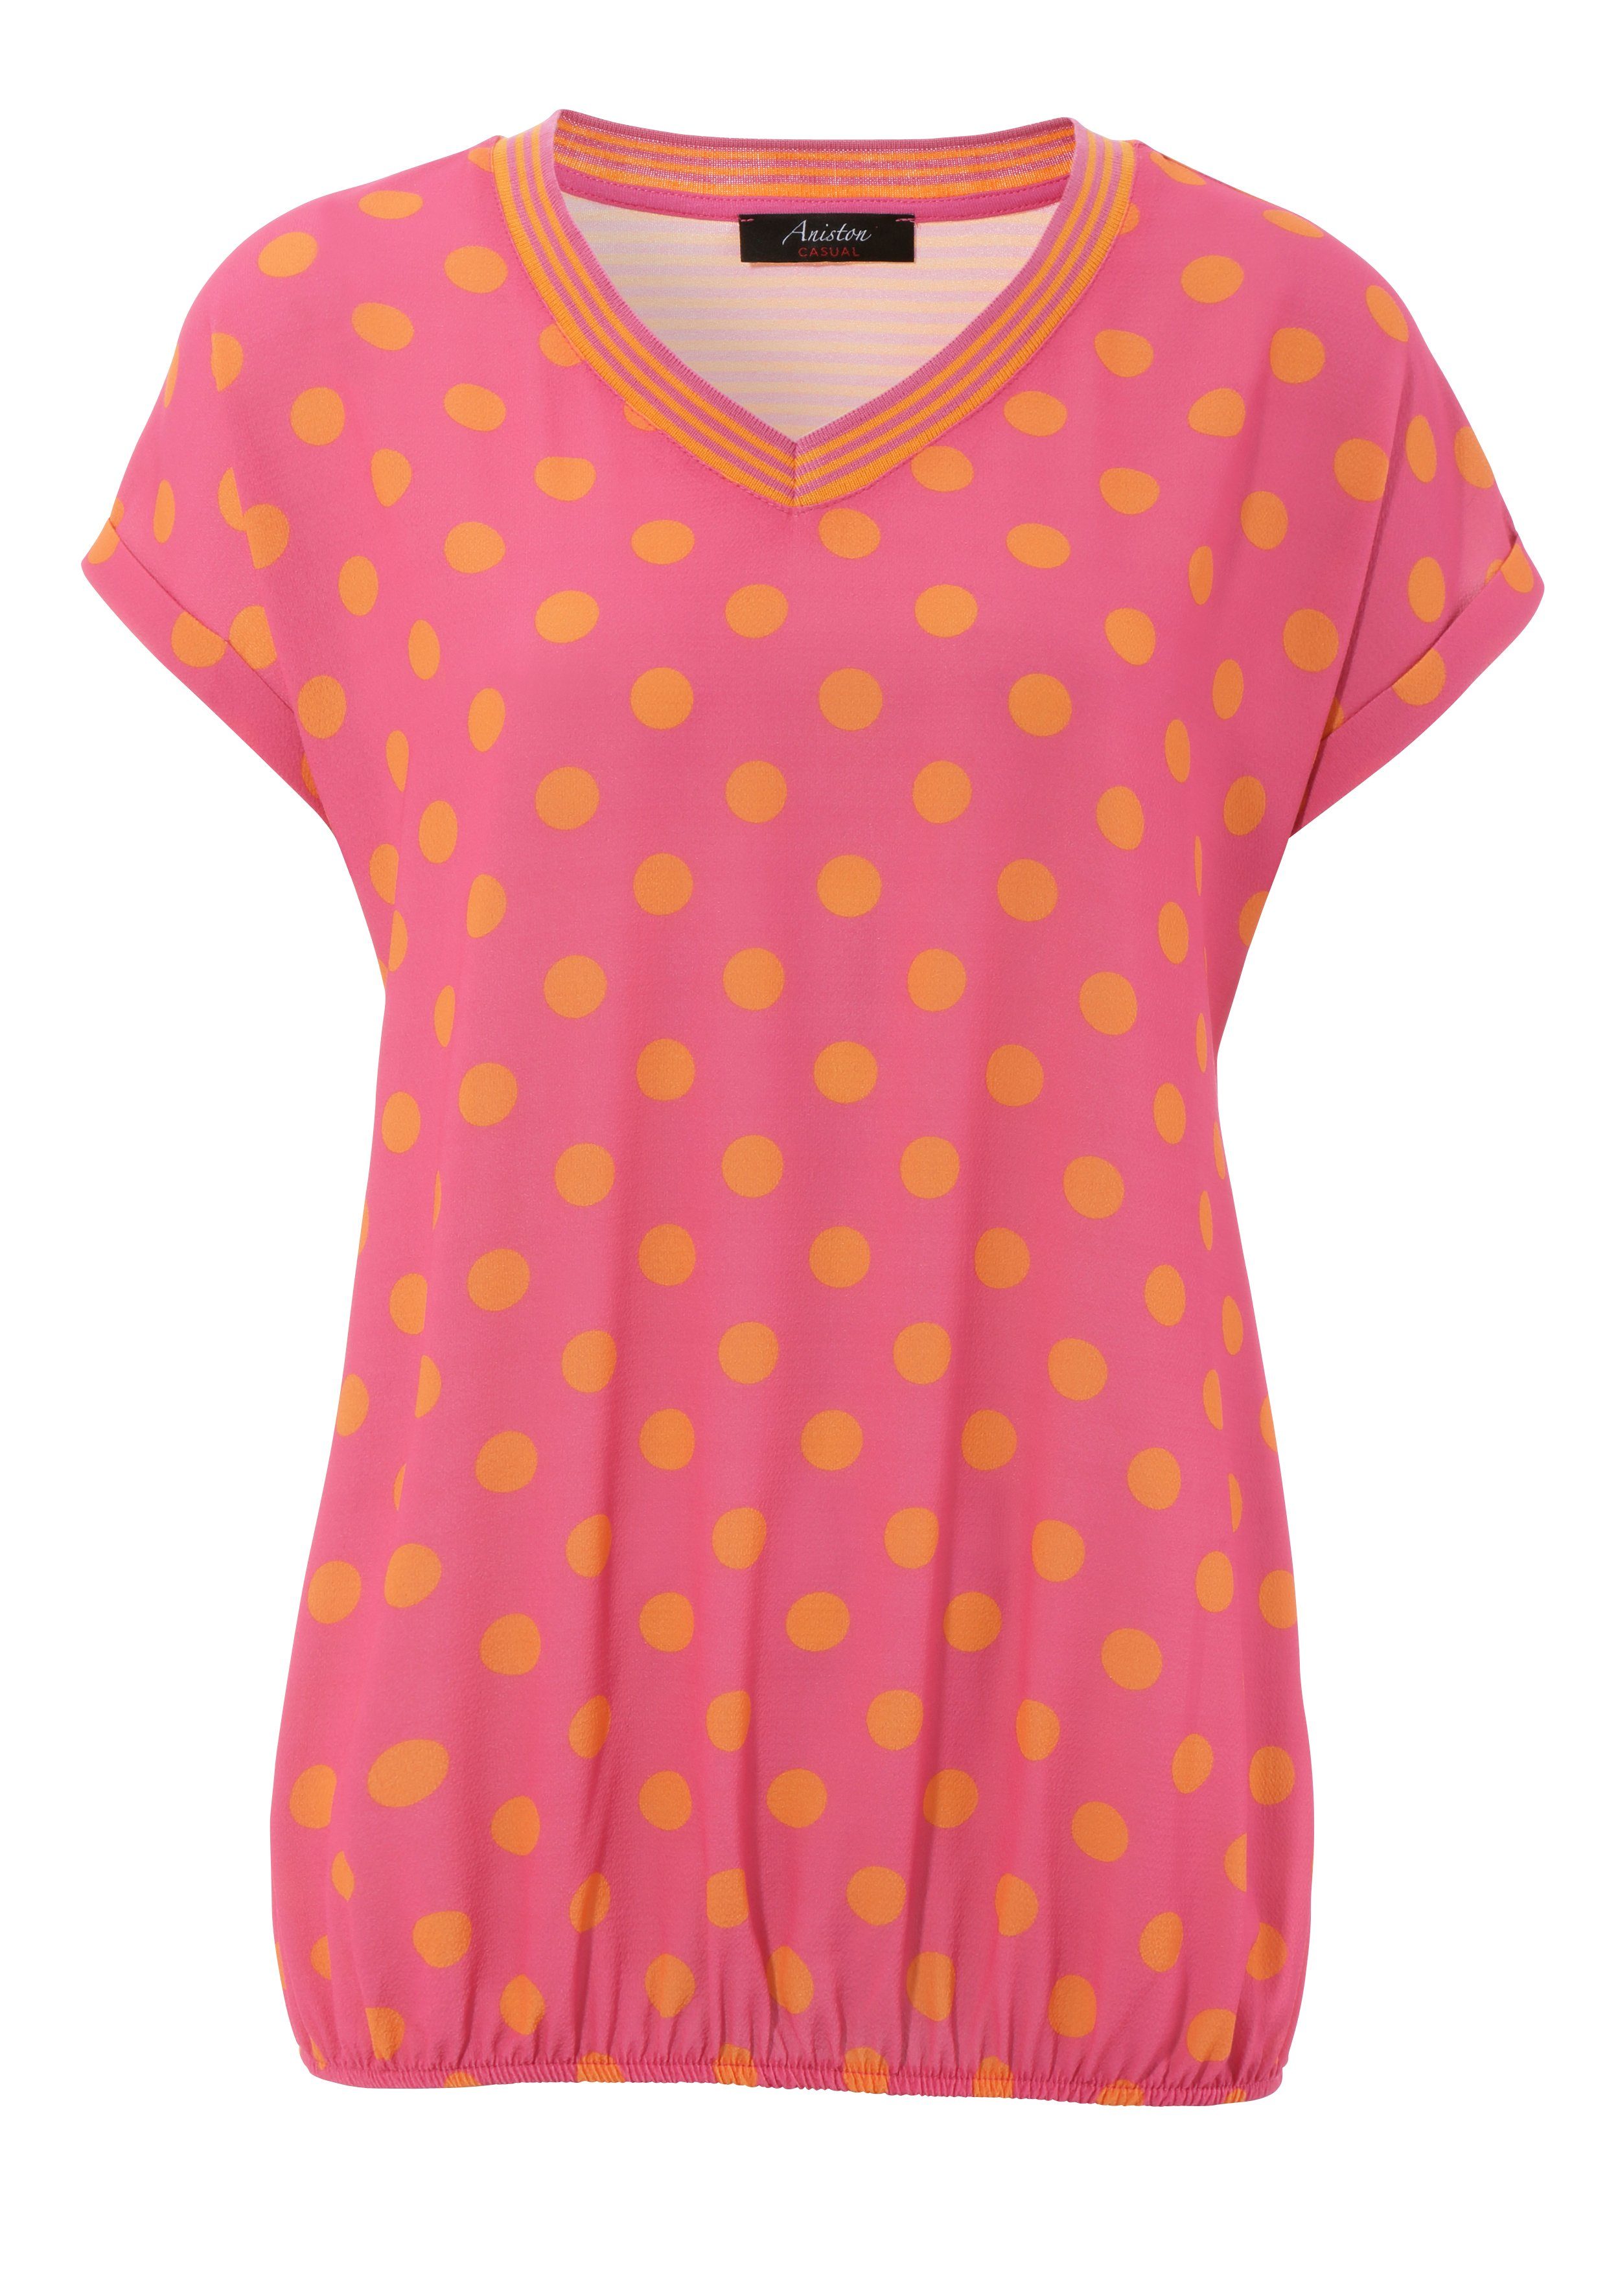 Aniston CASUAL T-Shirt im pink-orange und Material- Mustermix